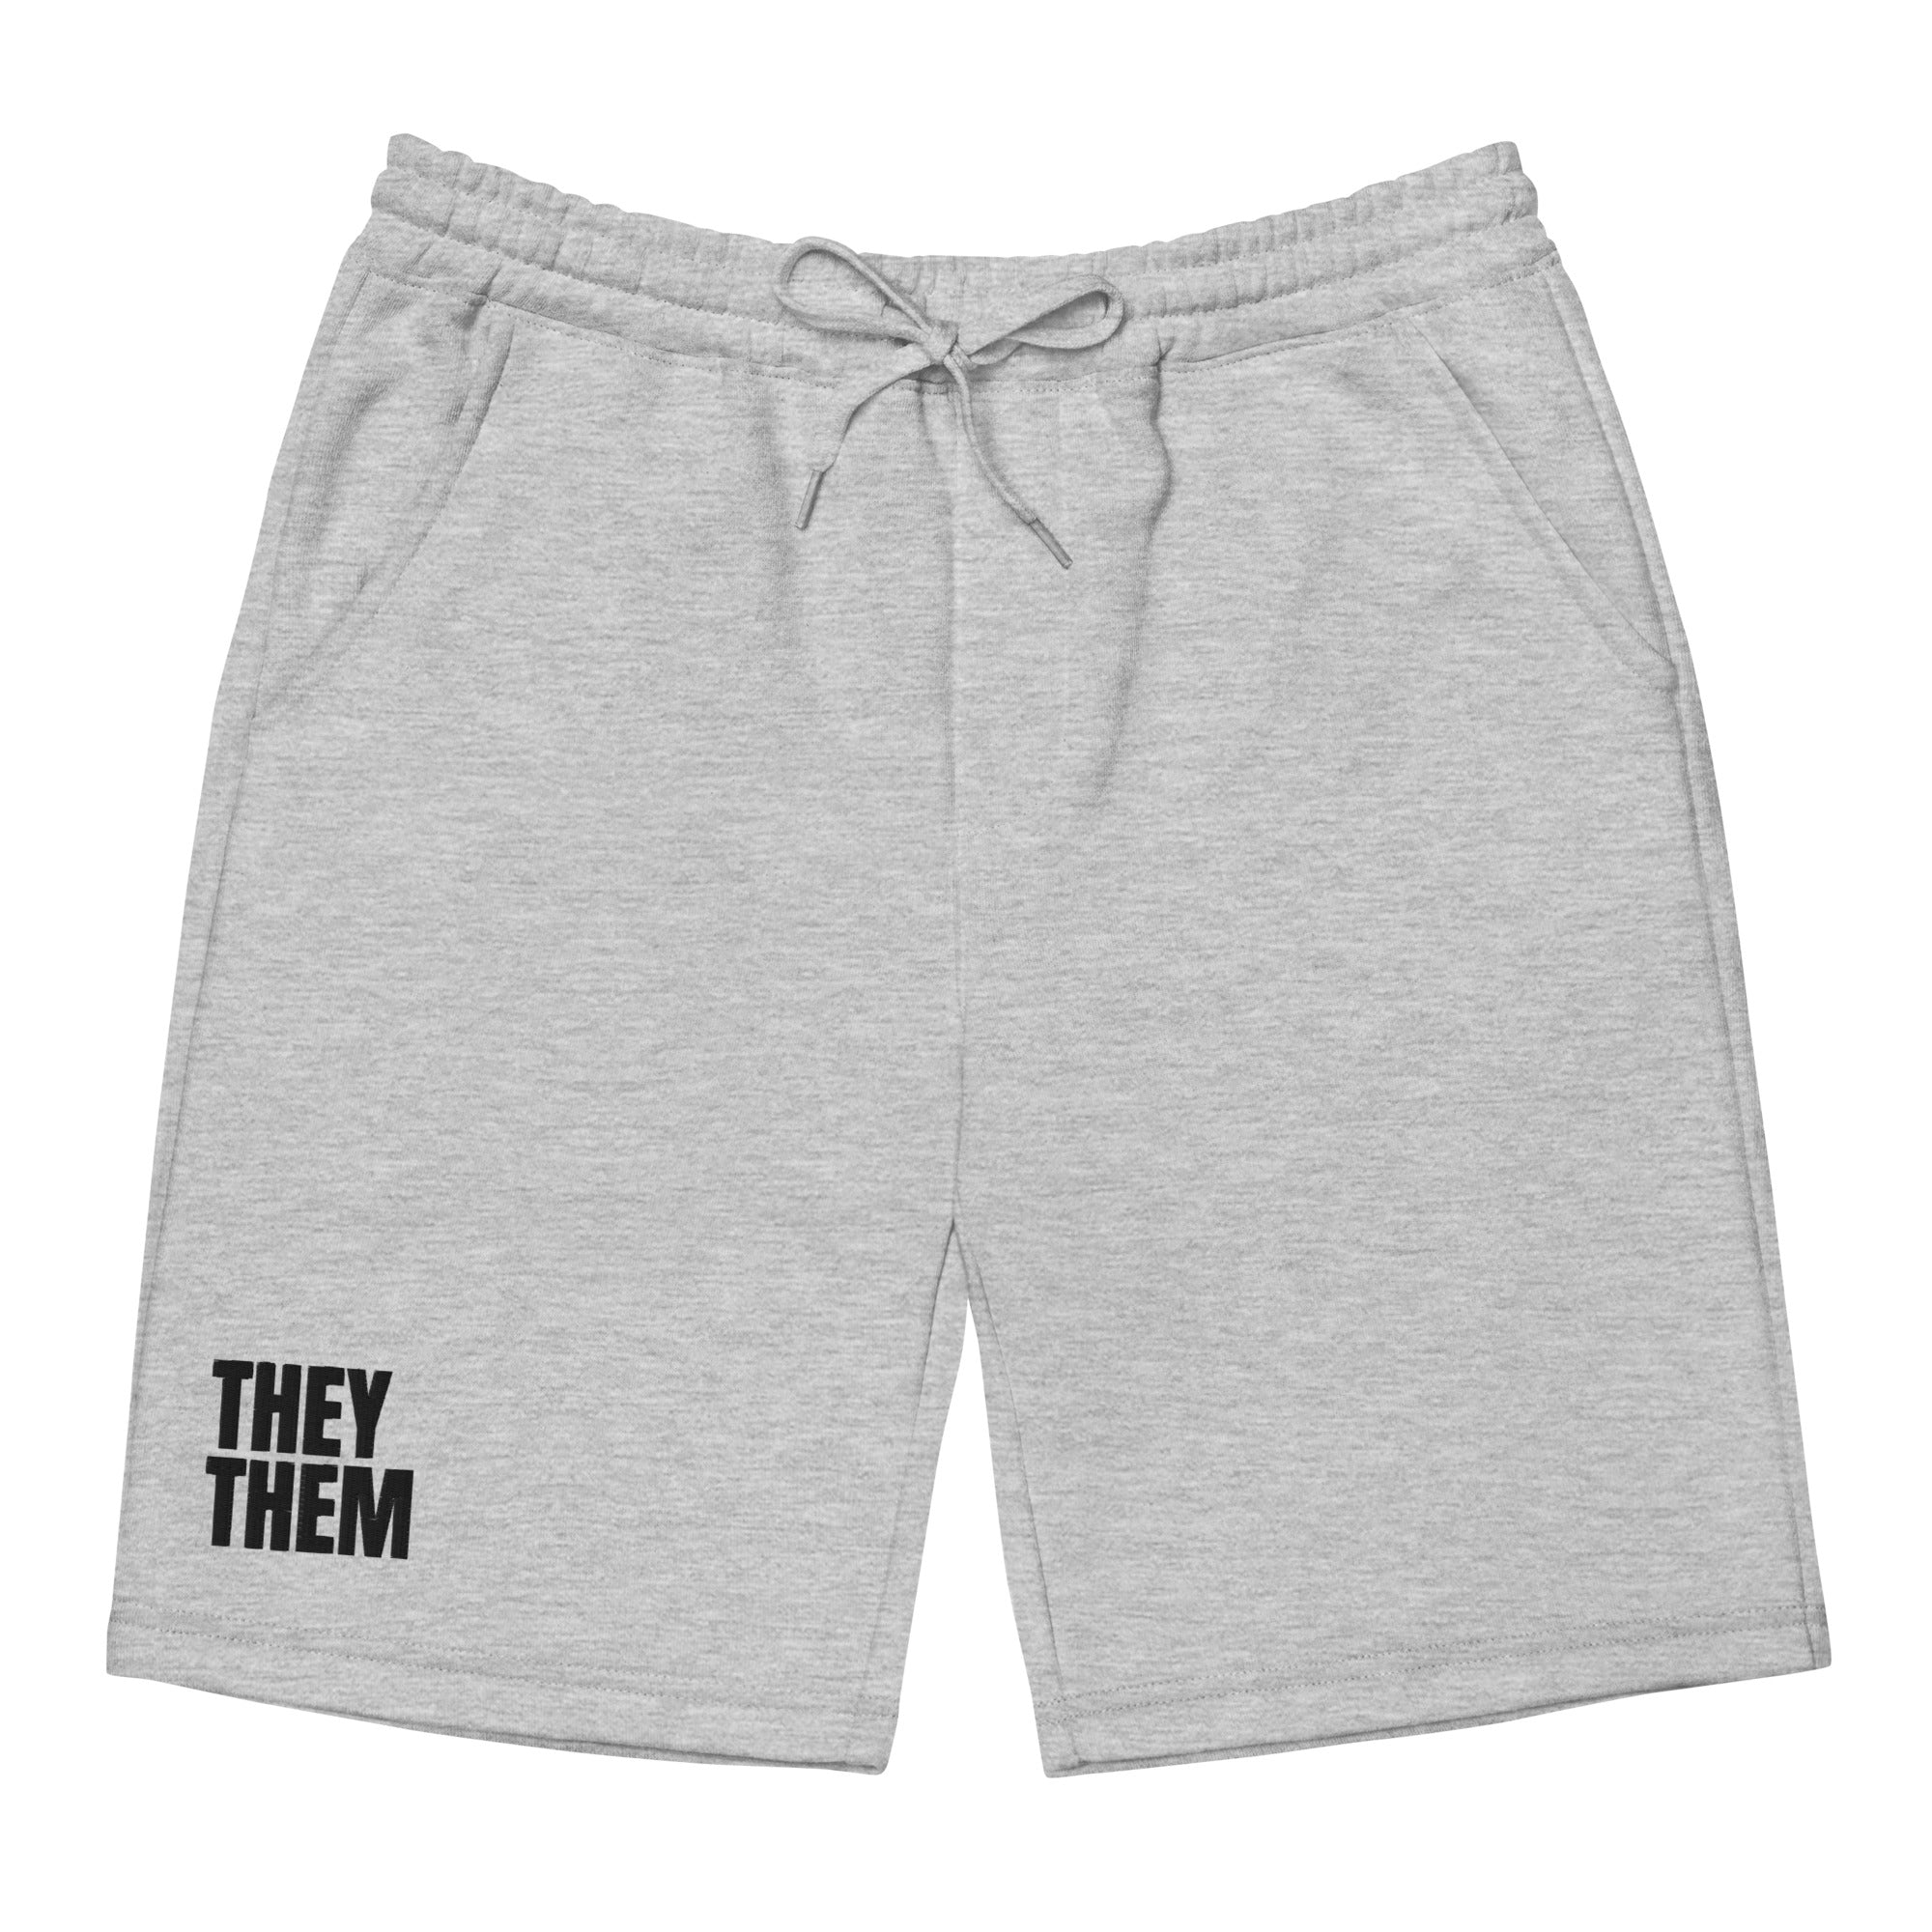 They/ Them fleece shorts